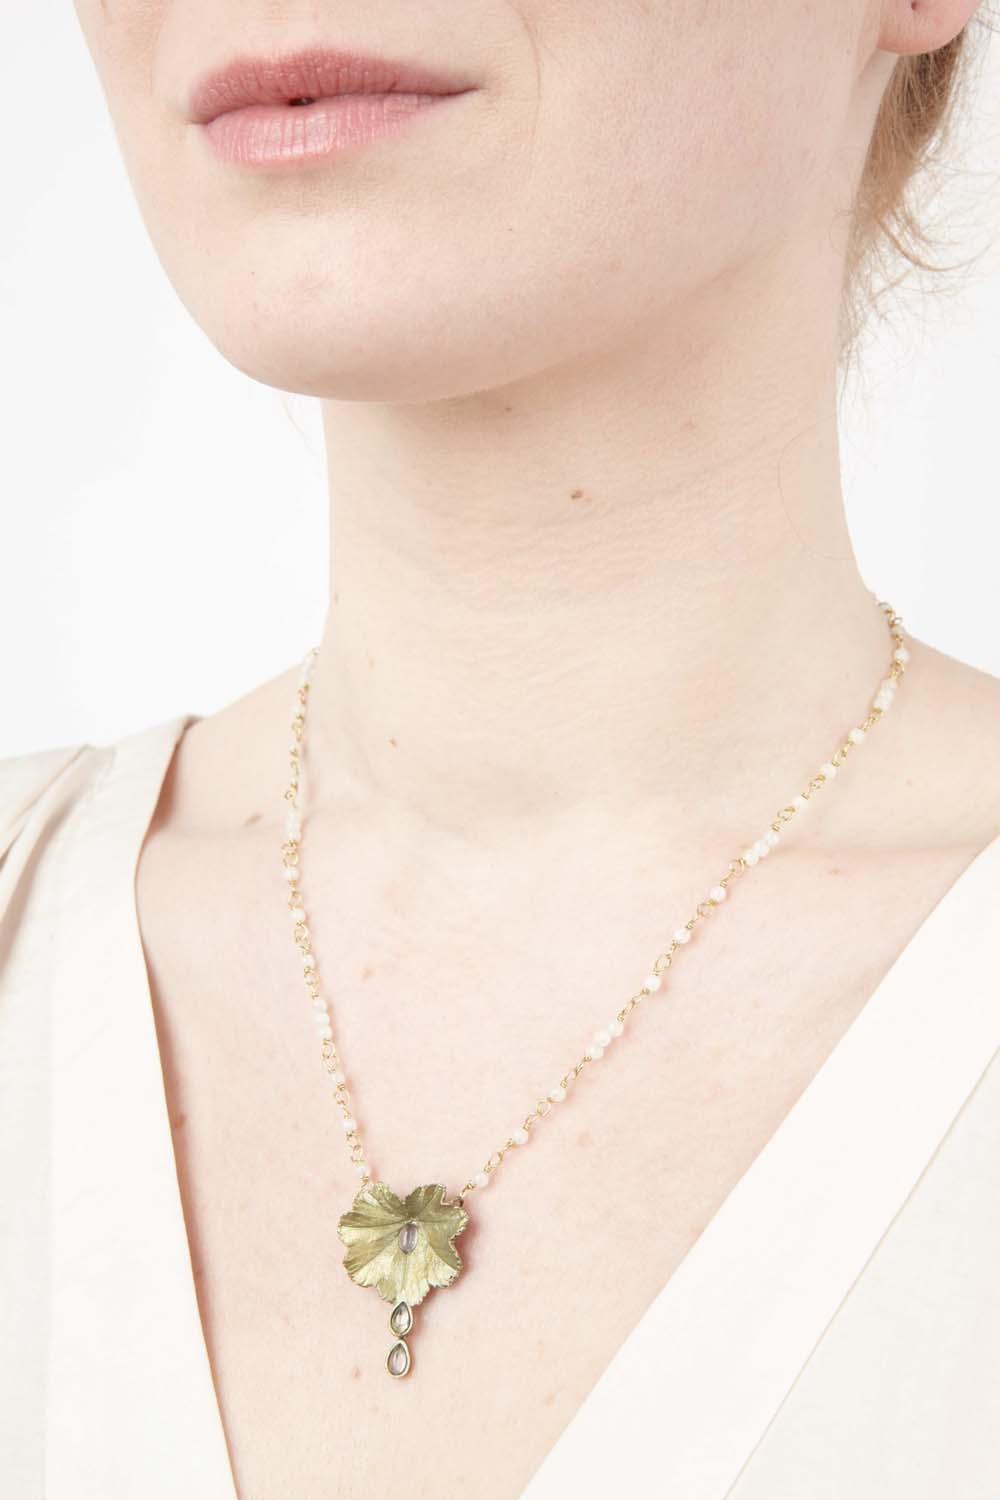 Lady's Mantle Pendant - Beads - Michael Michaud Jewellery